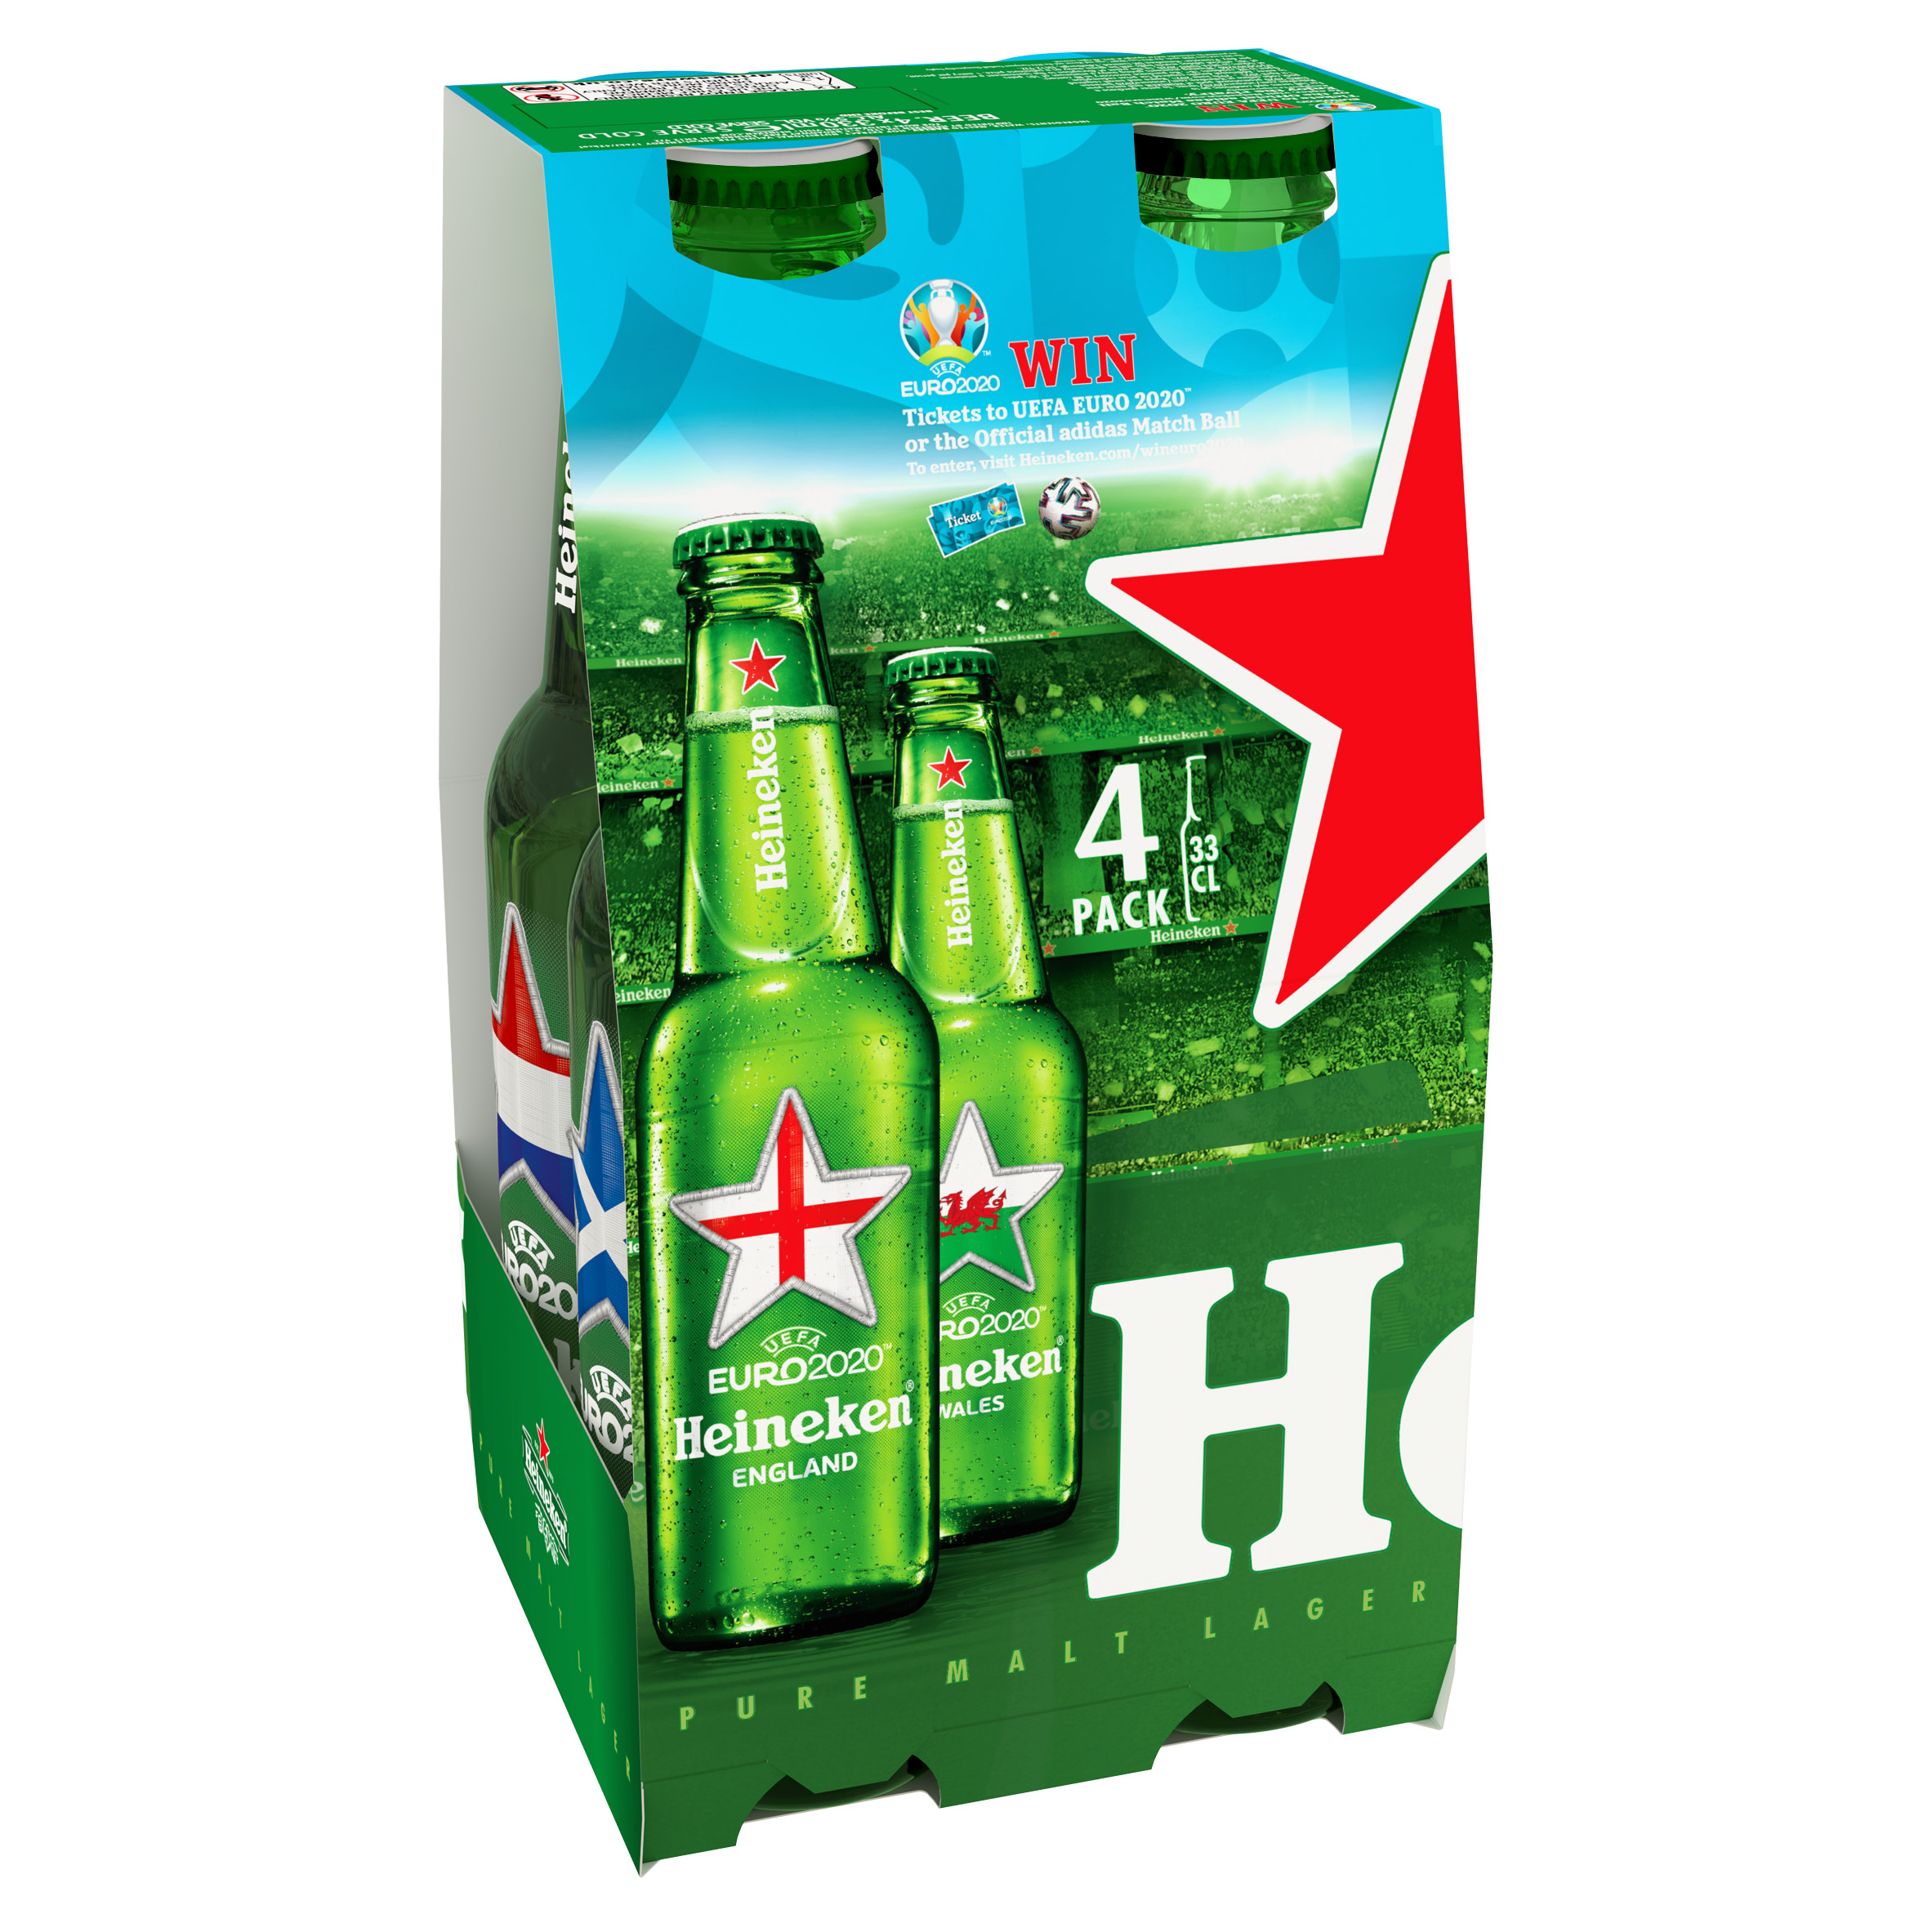 Heineken Heineken  EURO 2020 x 3 North Macedonia  330ml bottles UK 